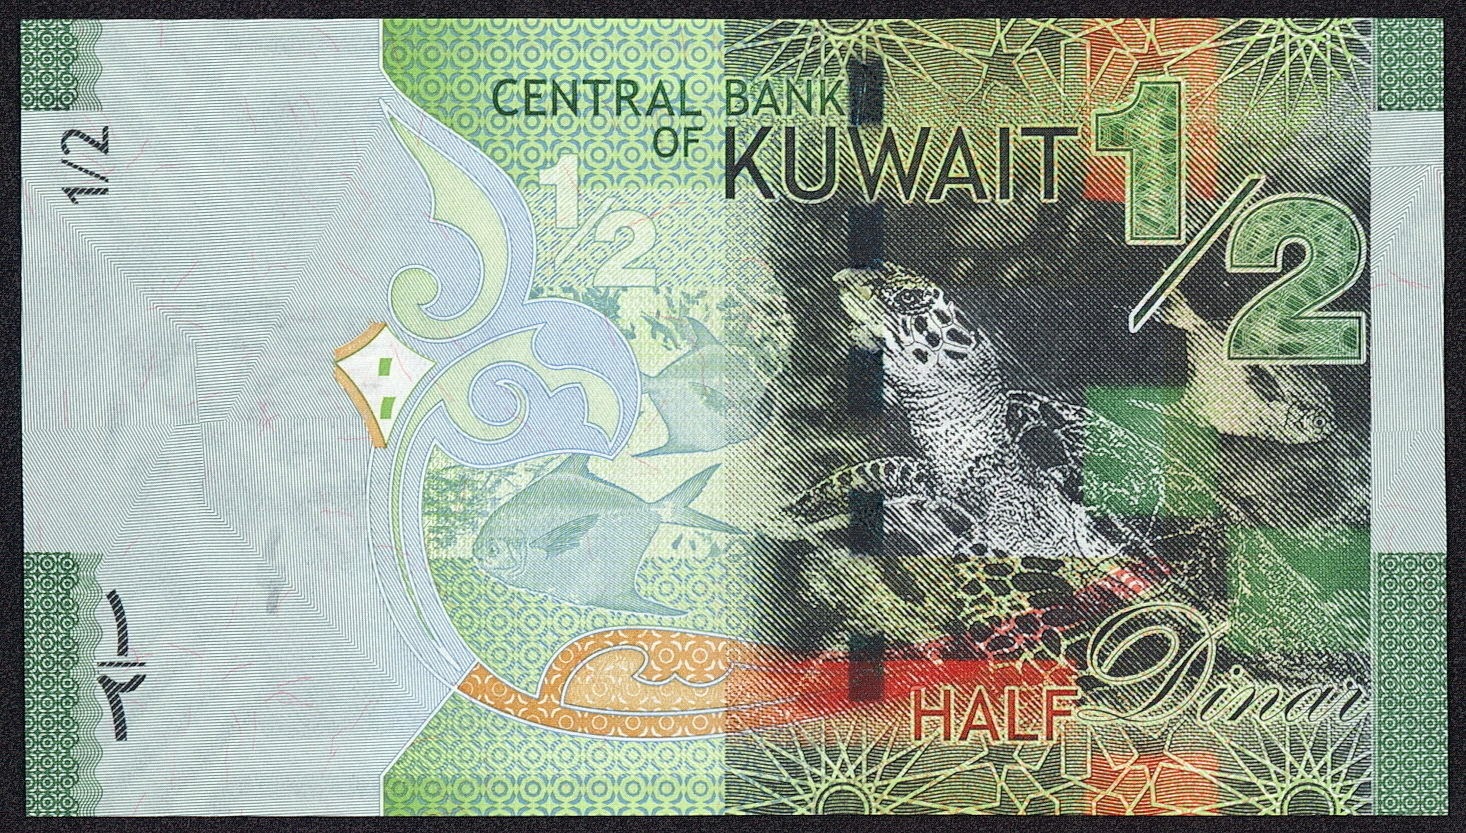 Kuwait money currency Half Dinar banknote 2014